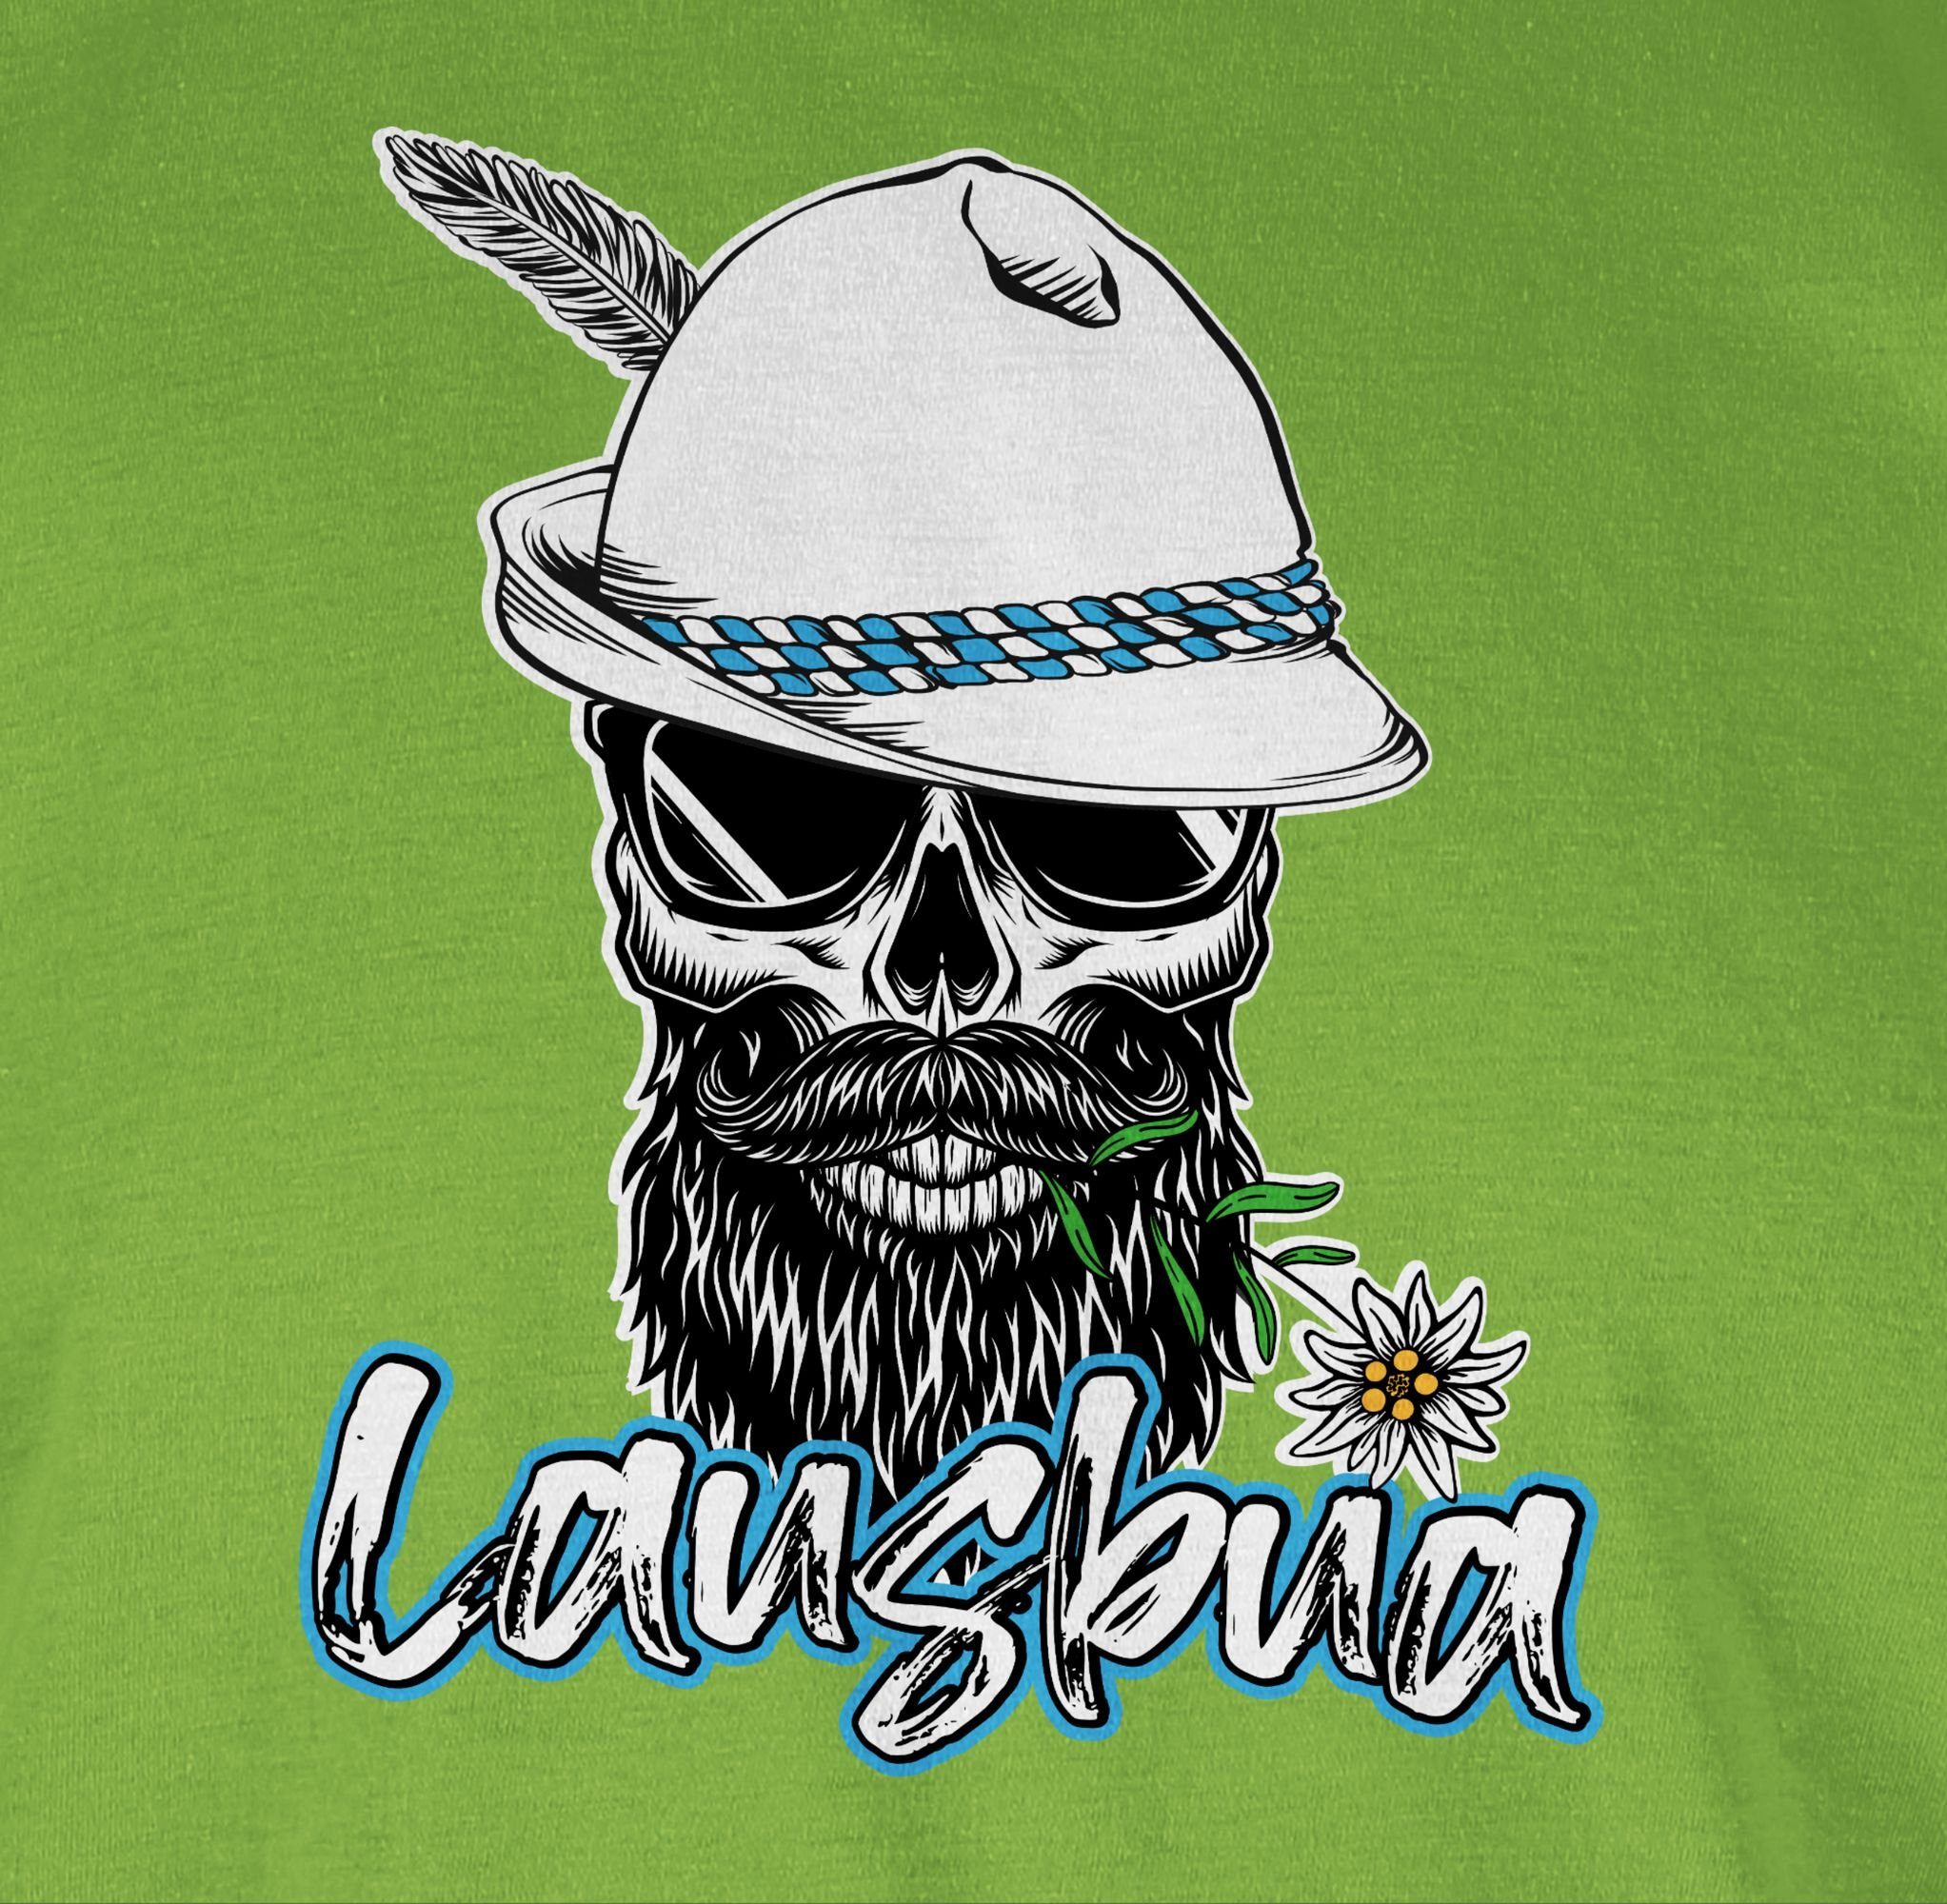 Skull Herren 02 T-Shirt Shirtracer Mode Hellgrün Oktoberfest Lausbua für Schlingel Bayrisch Totenkopf Lausbub